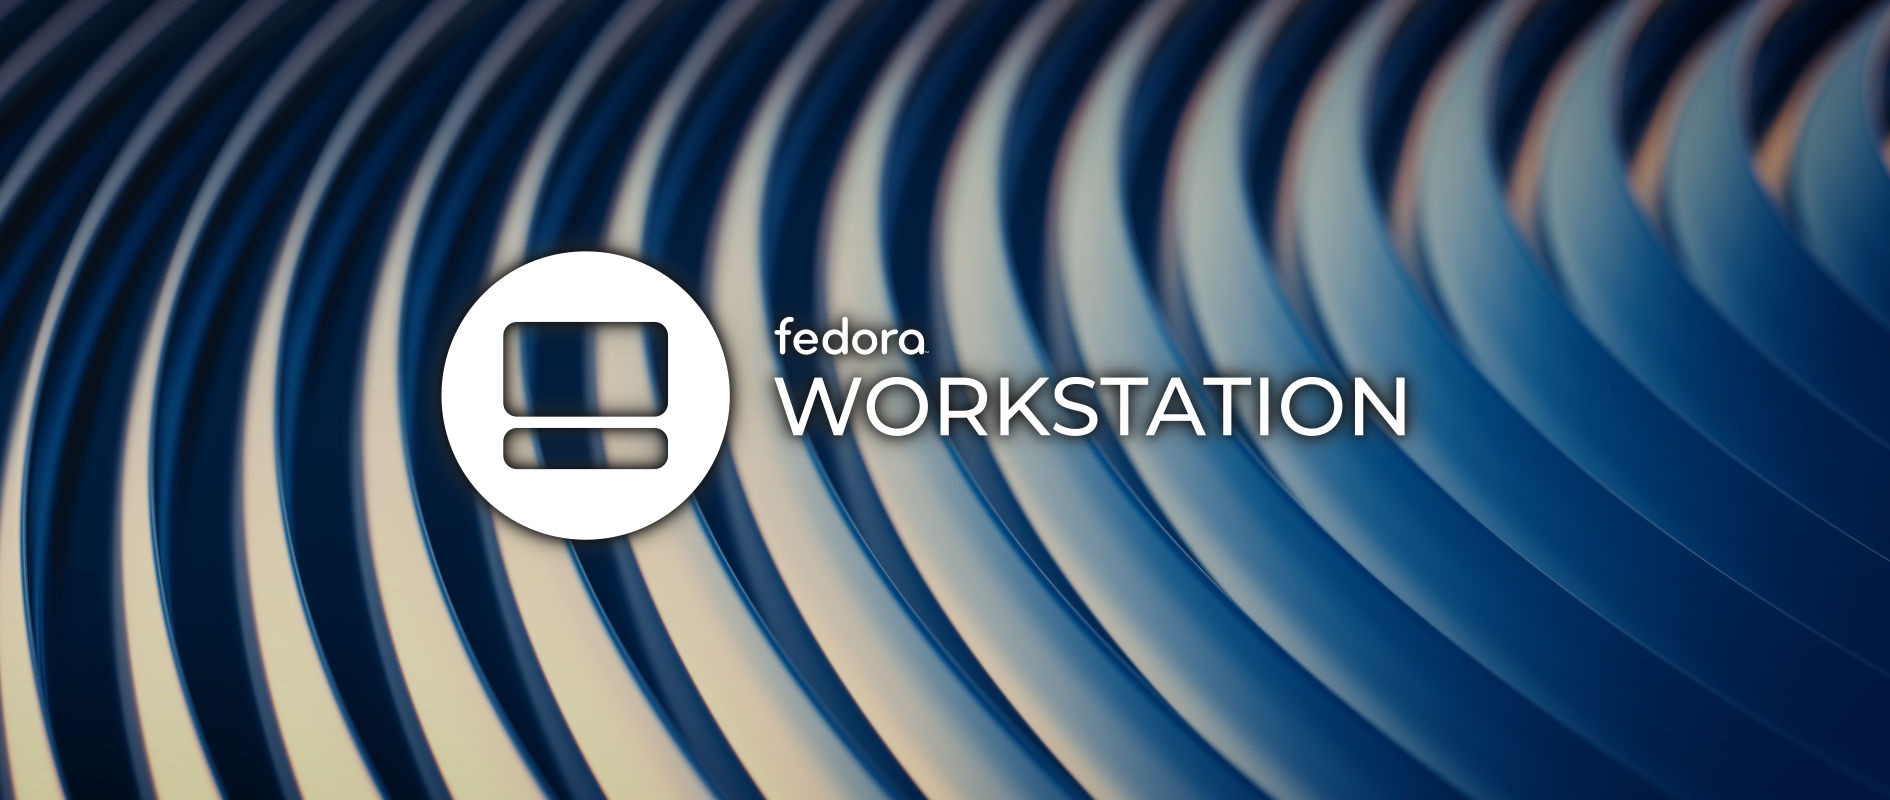 fedora 30 workstation